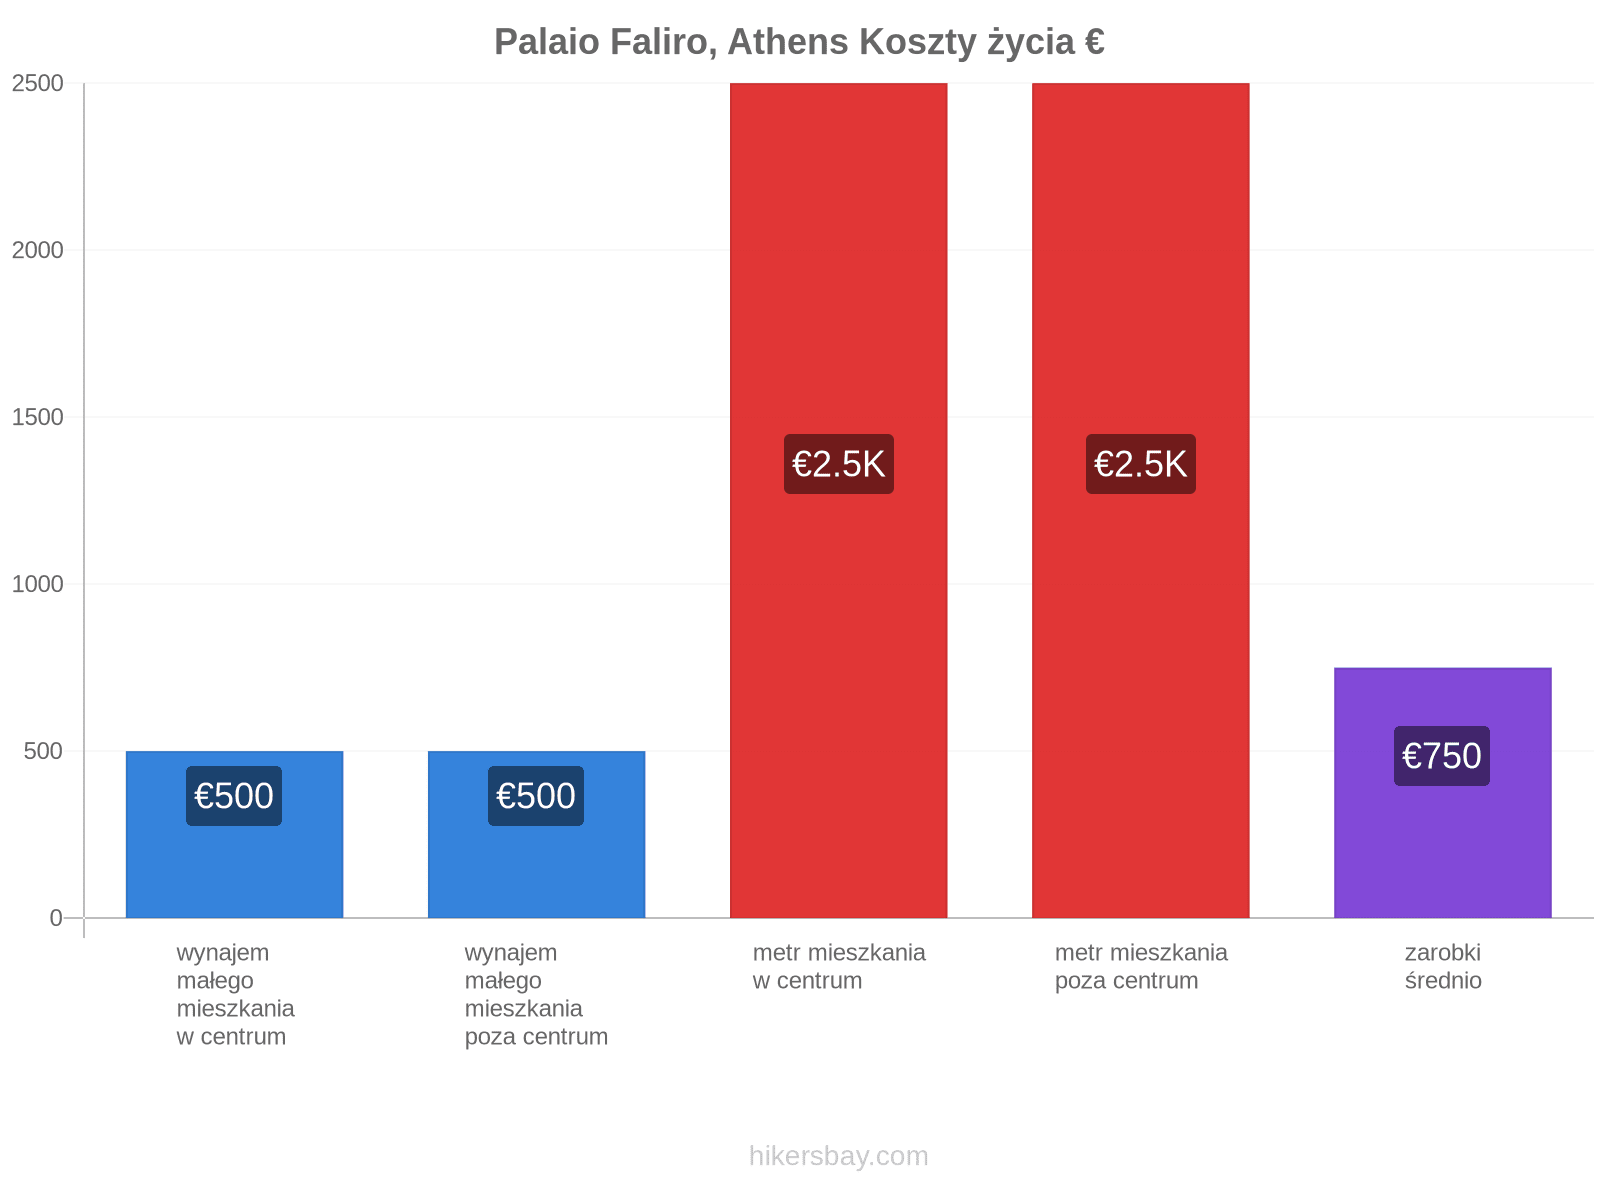 Palaio Faliro, Athens koszty życia hikersbay.com